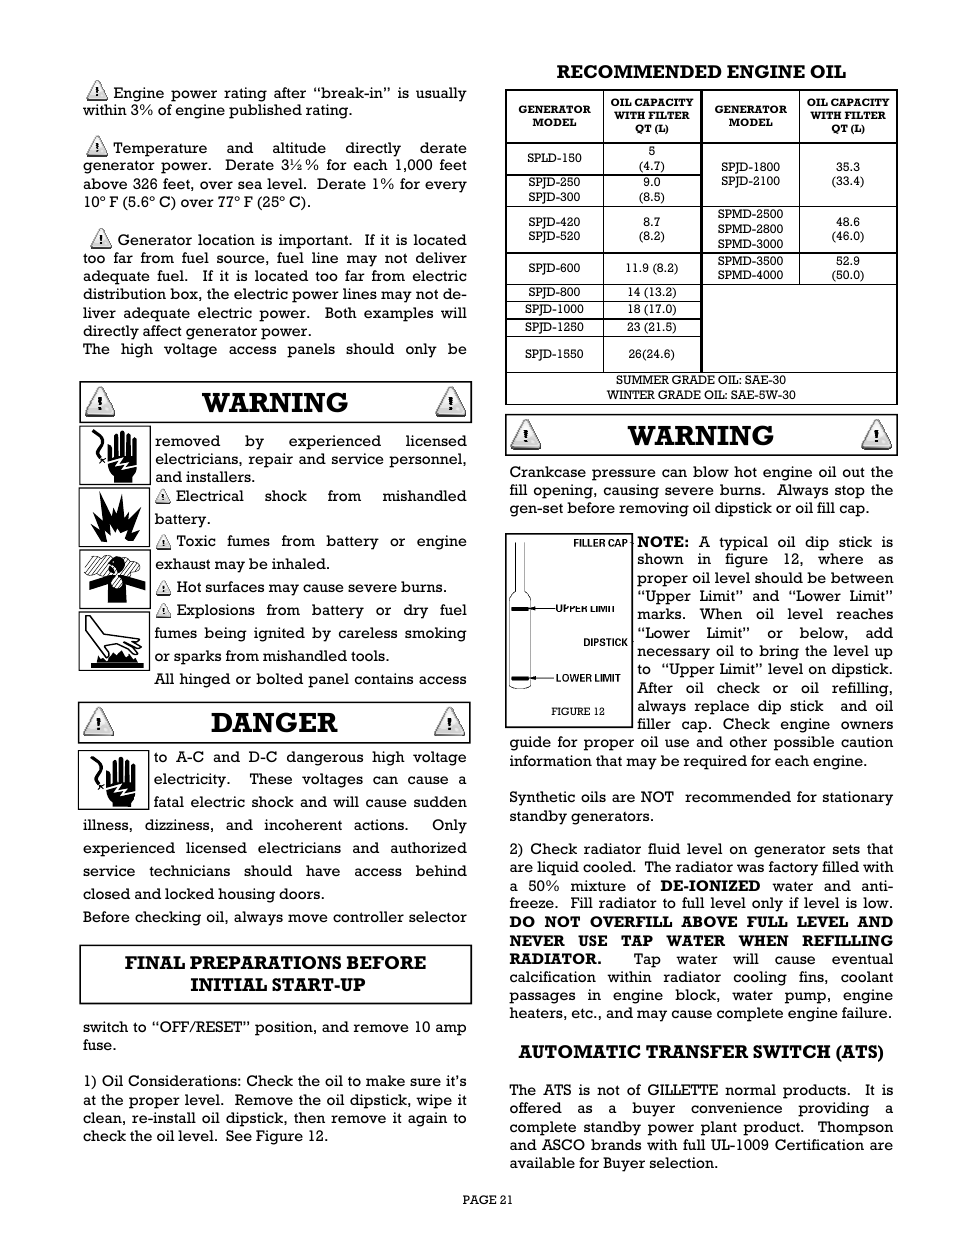 Warning, Danger, Automatic transfer switch (ats) | Gillette Generators SPMD-2500 THRU SPMD-4000 User Manual | Page 21 / 27